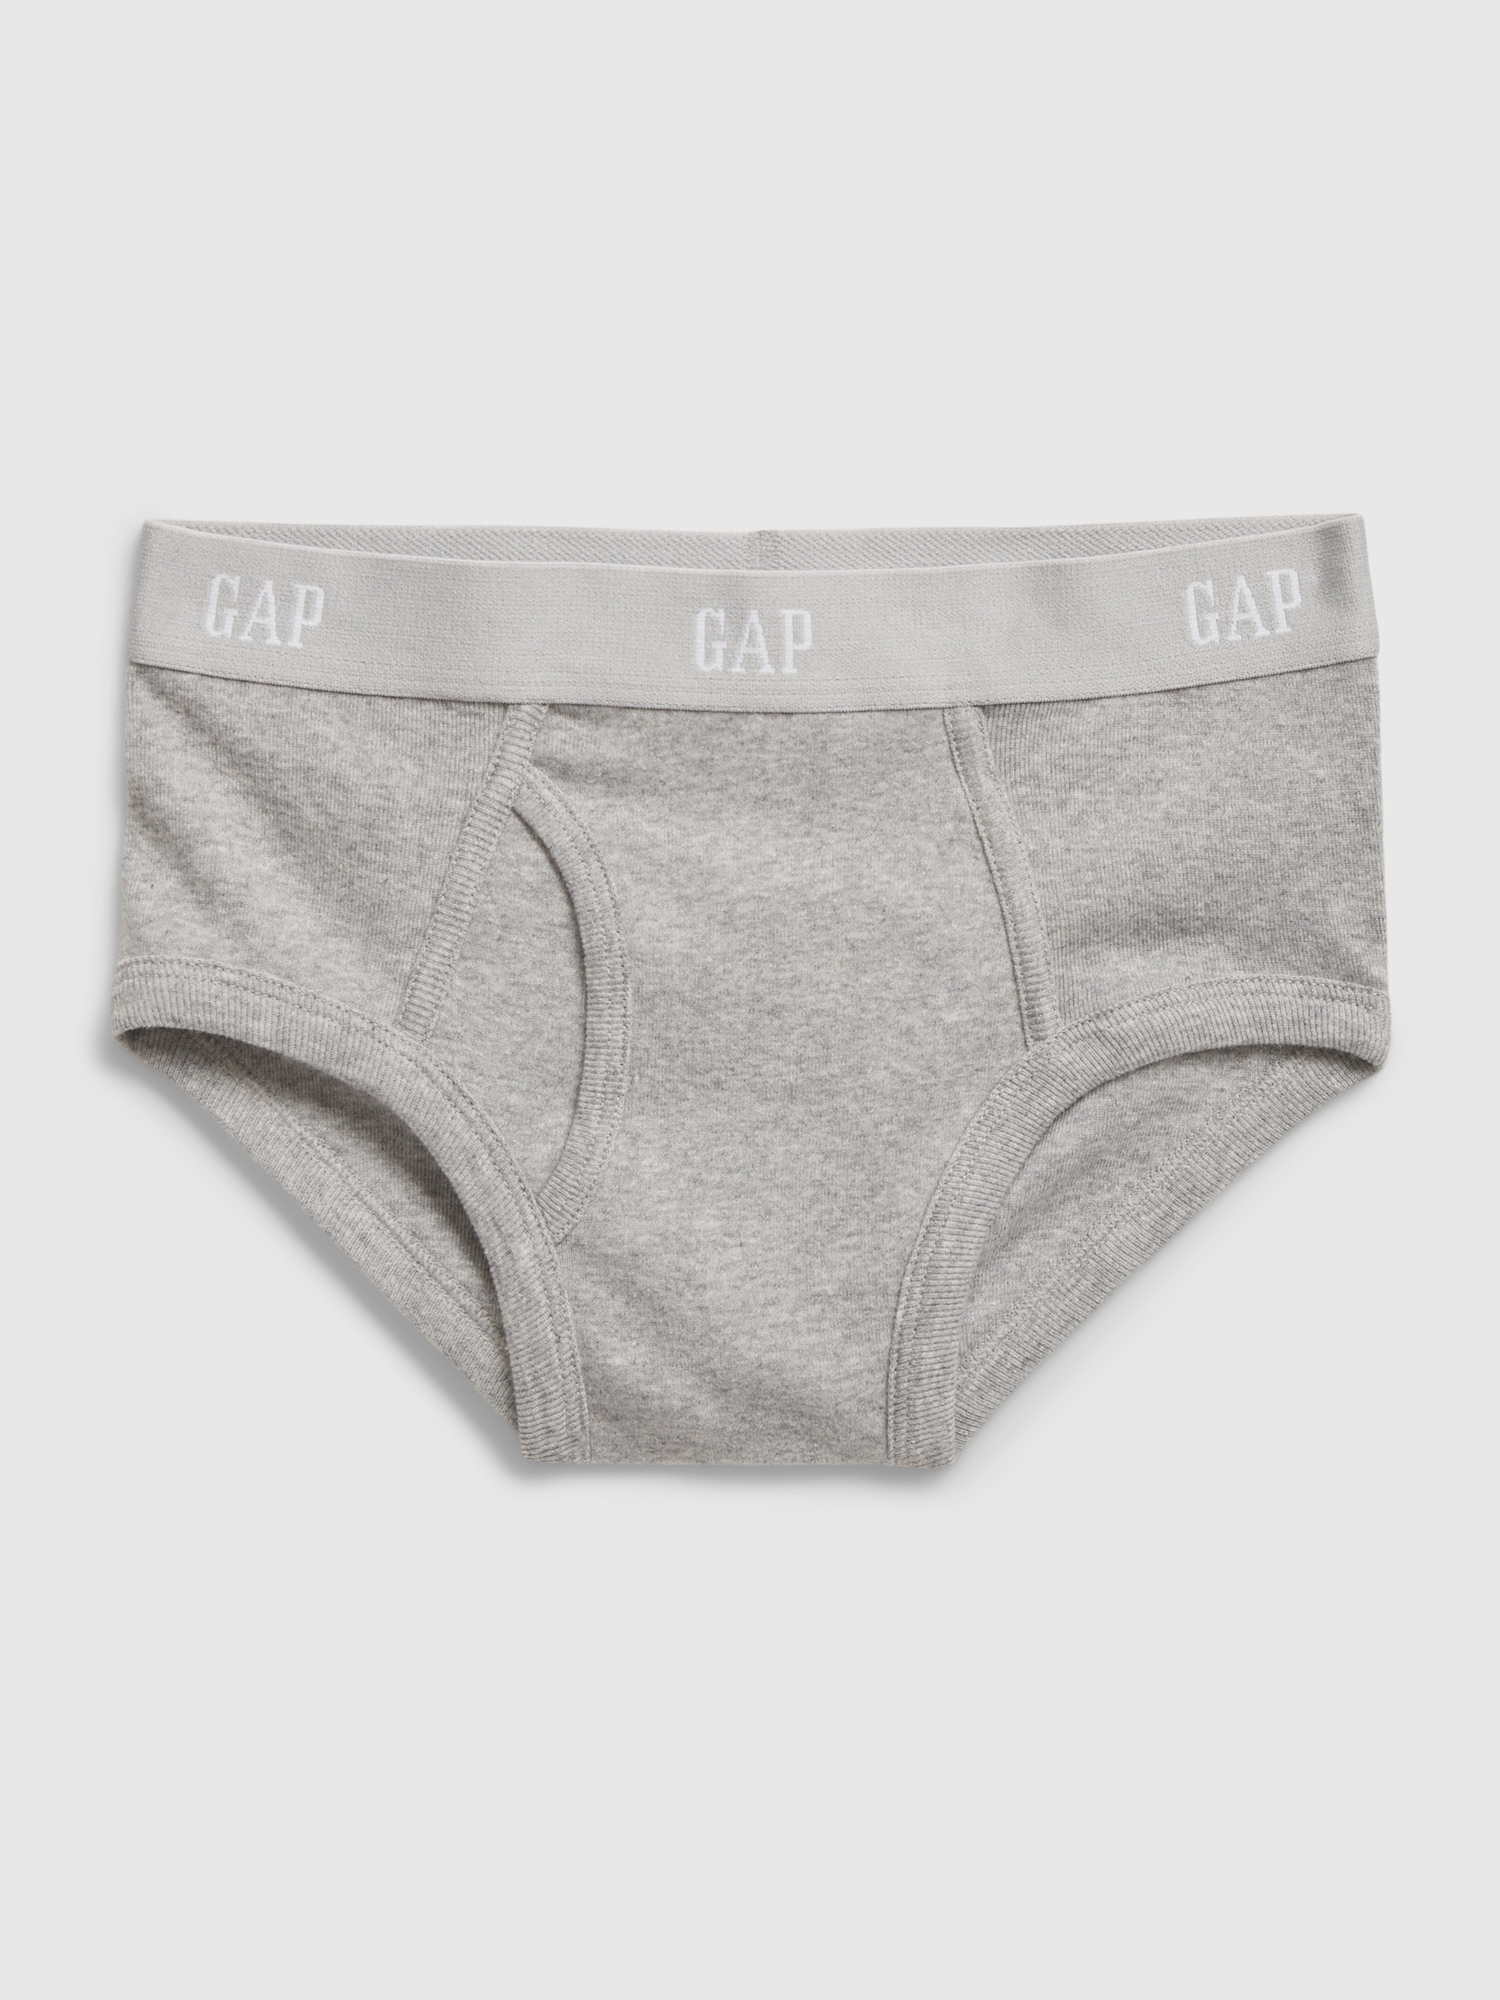 GAP Underwear for women, Buy online